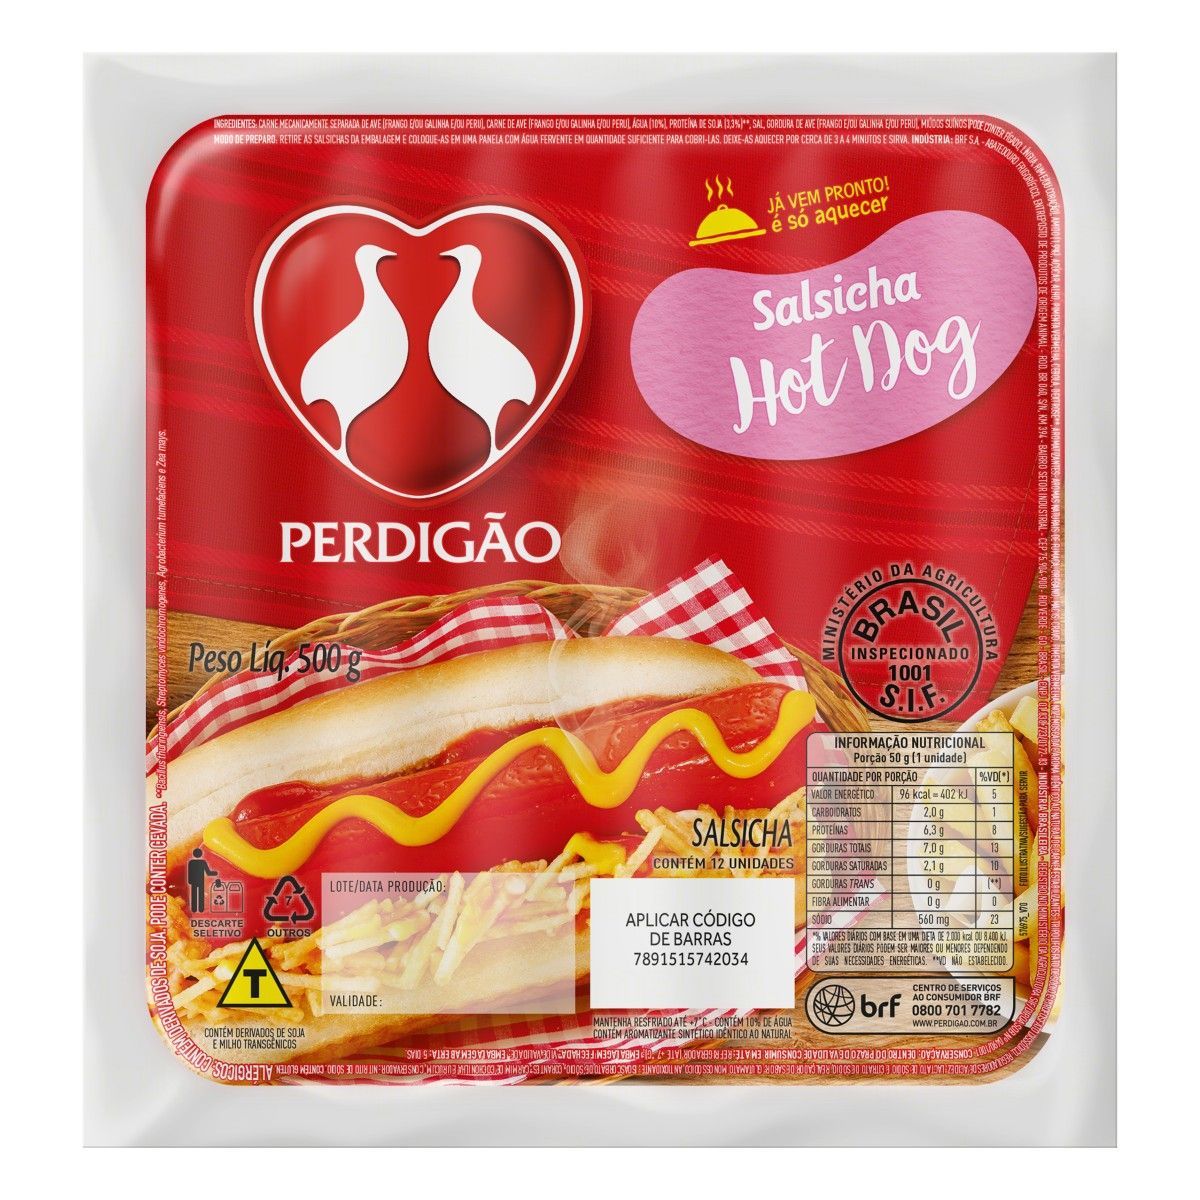 Salsicha Hot-Dog Perdigão 500g